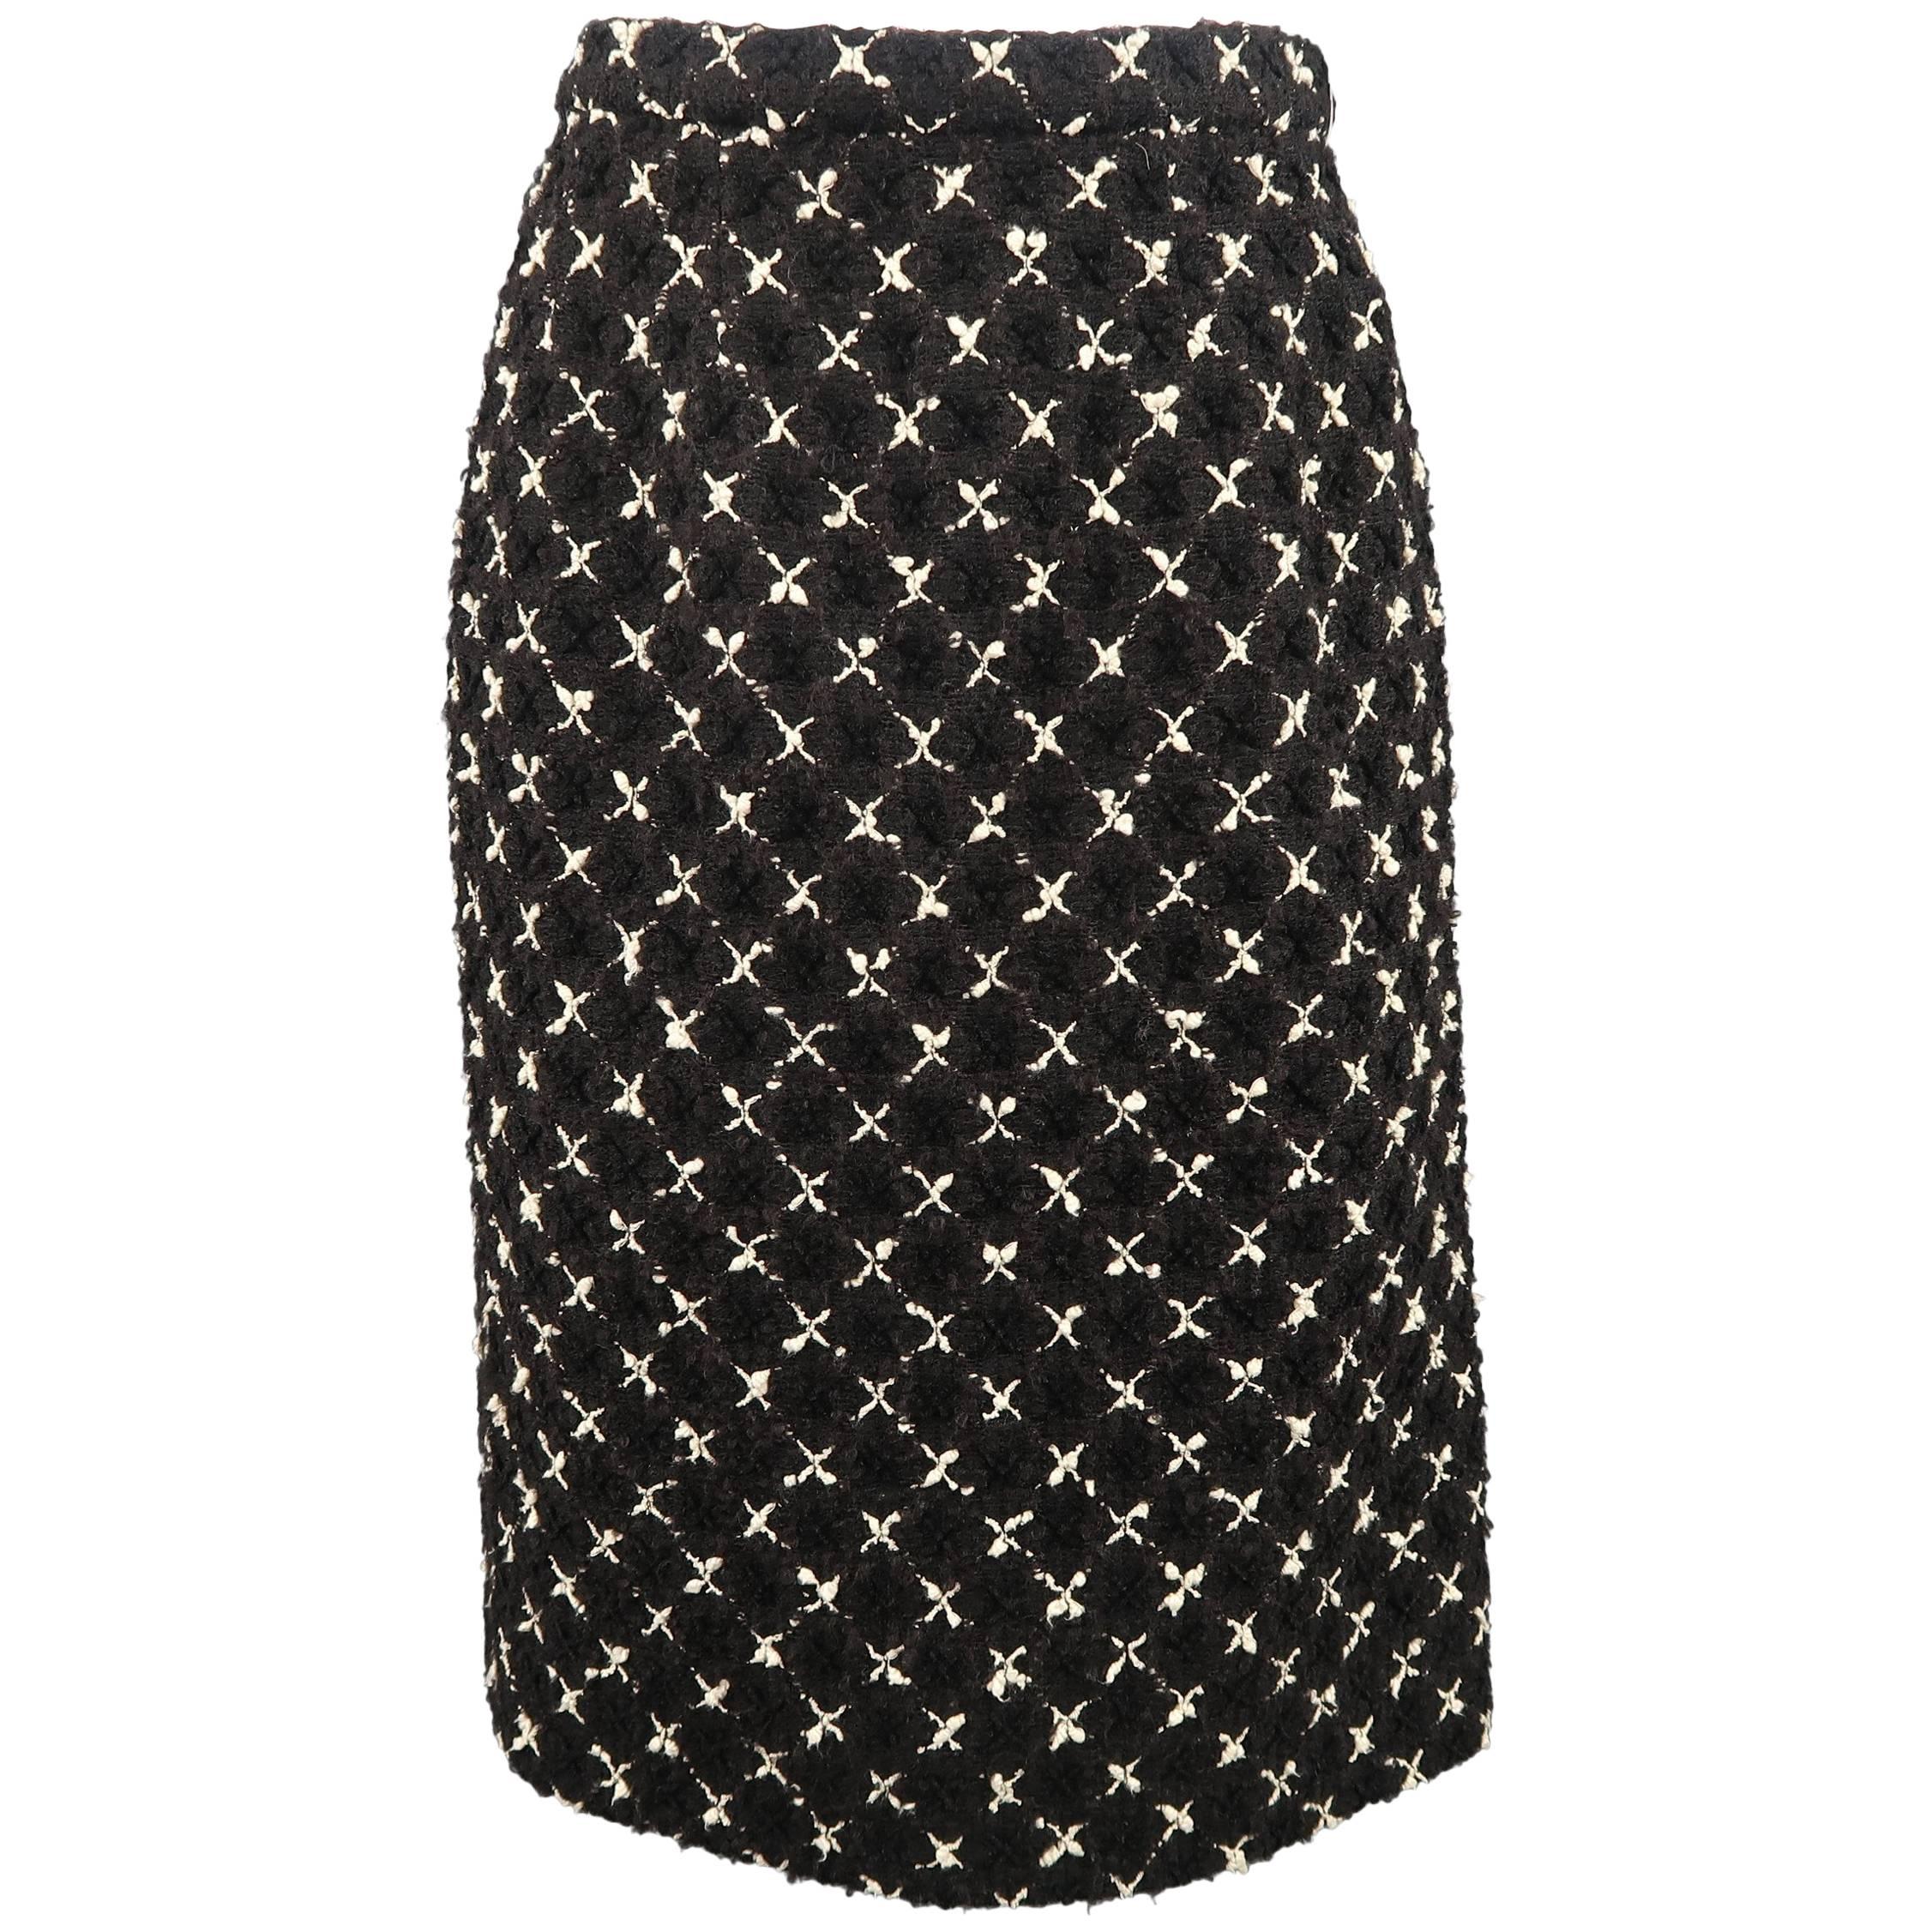 Vintage CHANEL Skirt - Small Black & White X Print Boucle Tweed Pencil Skirt